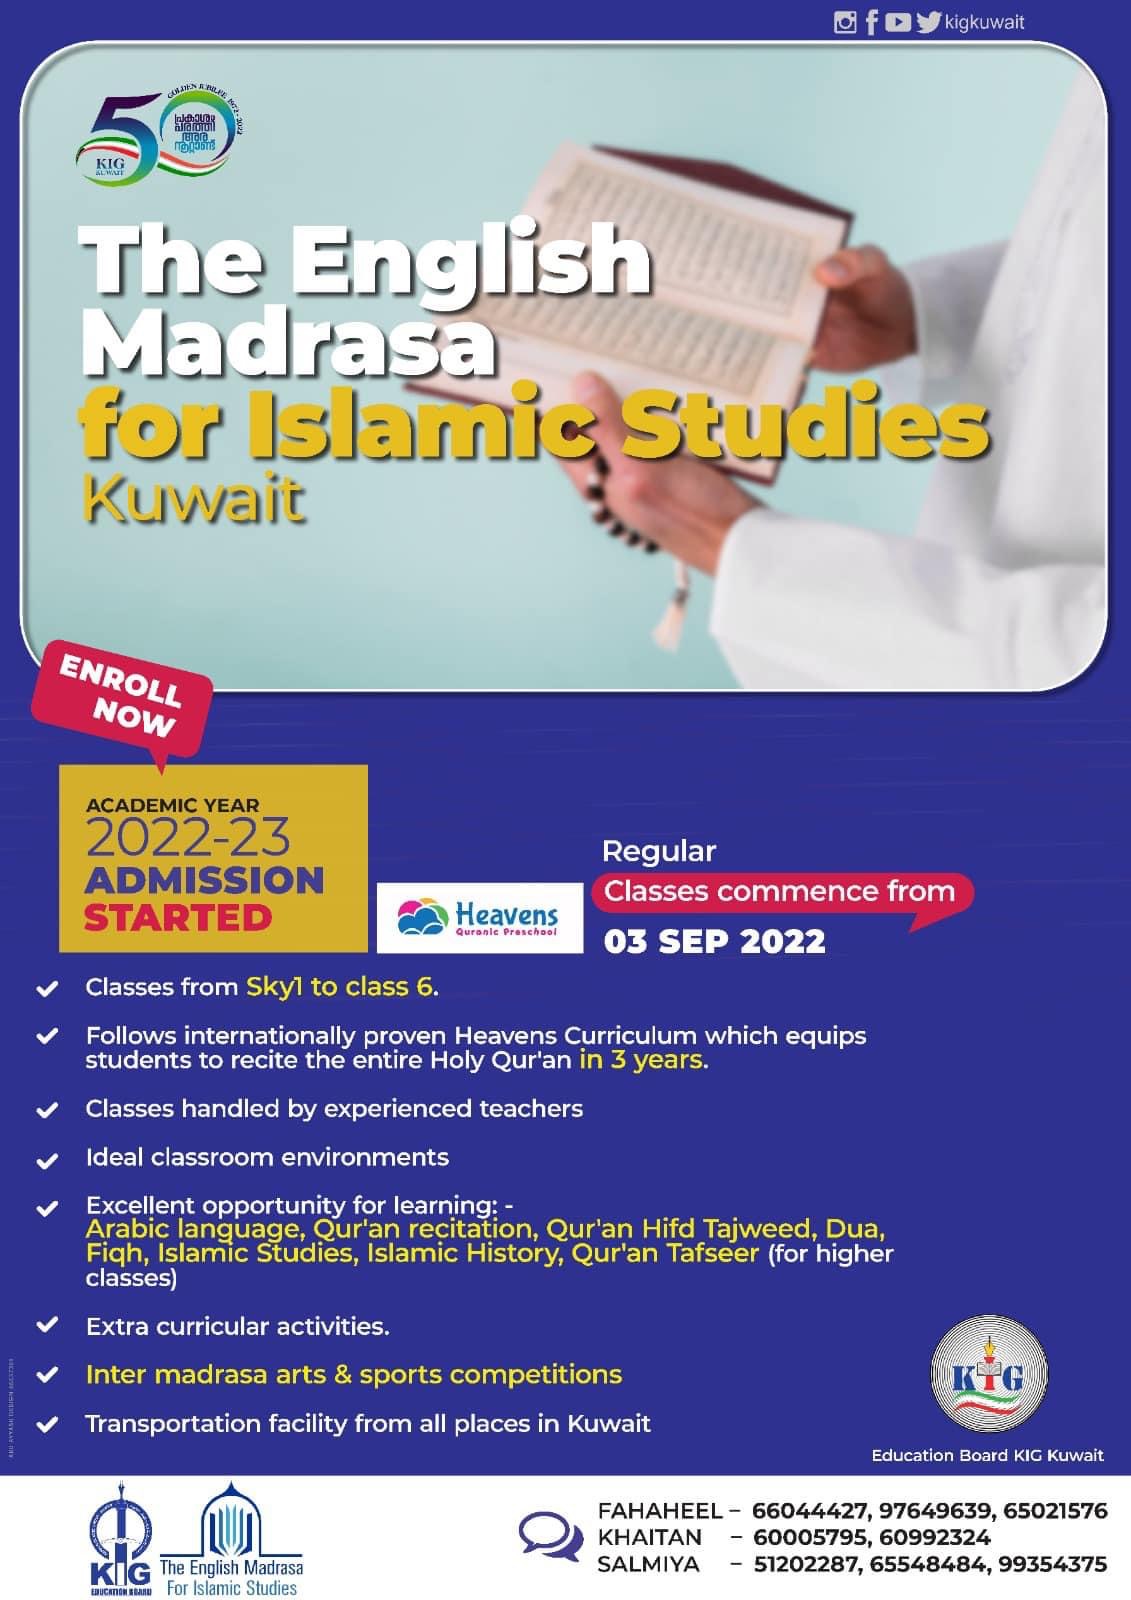 The English madrasa studies